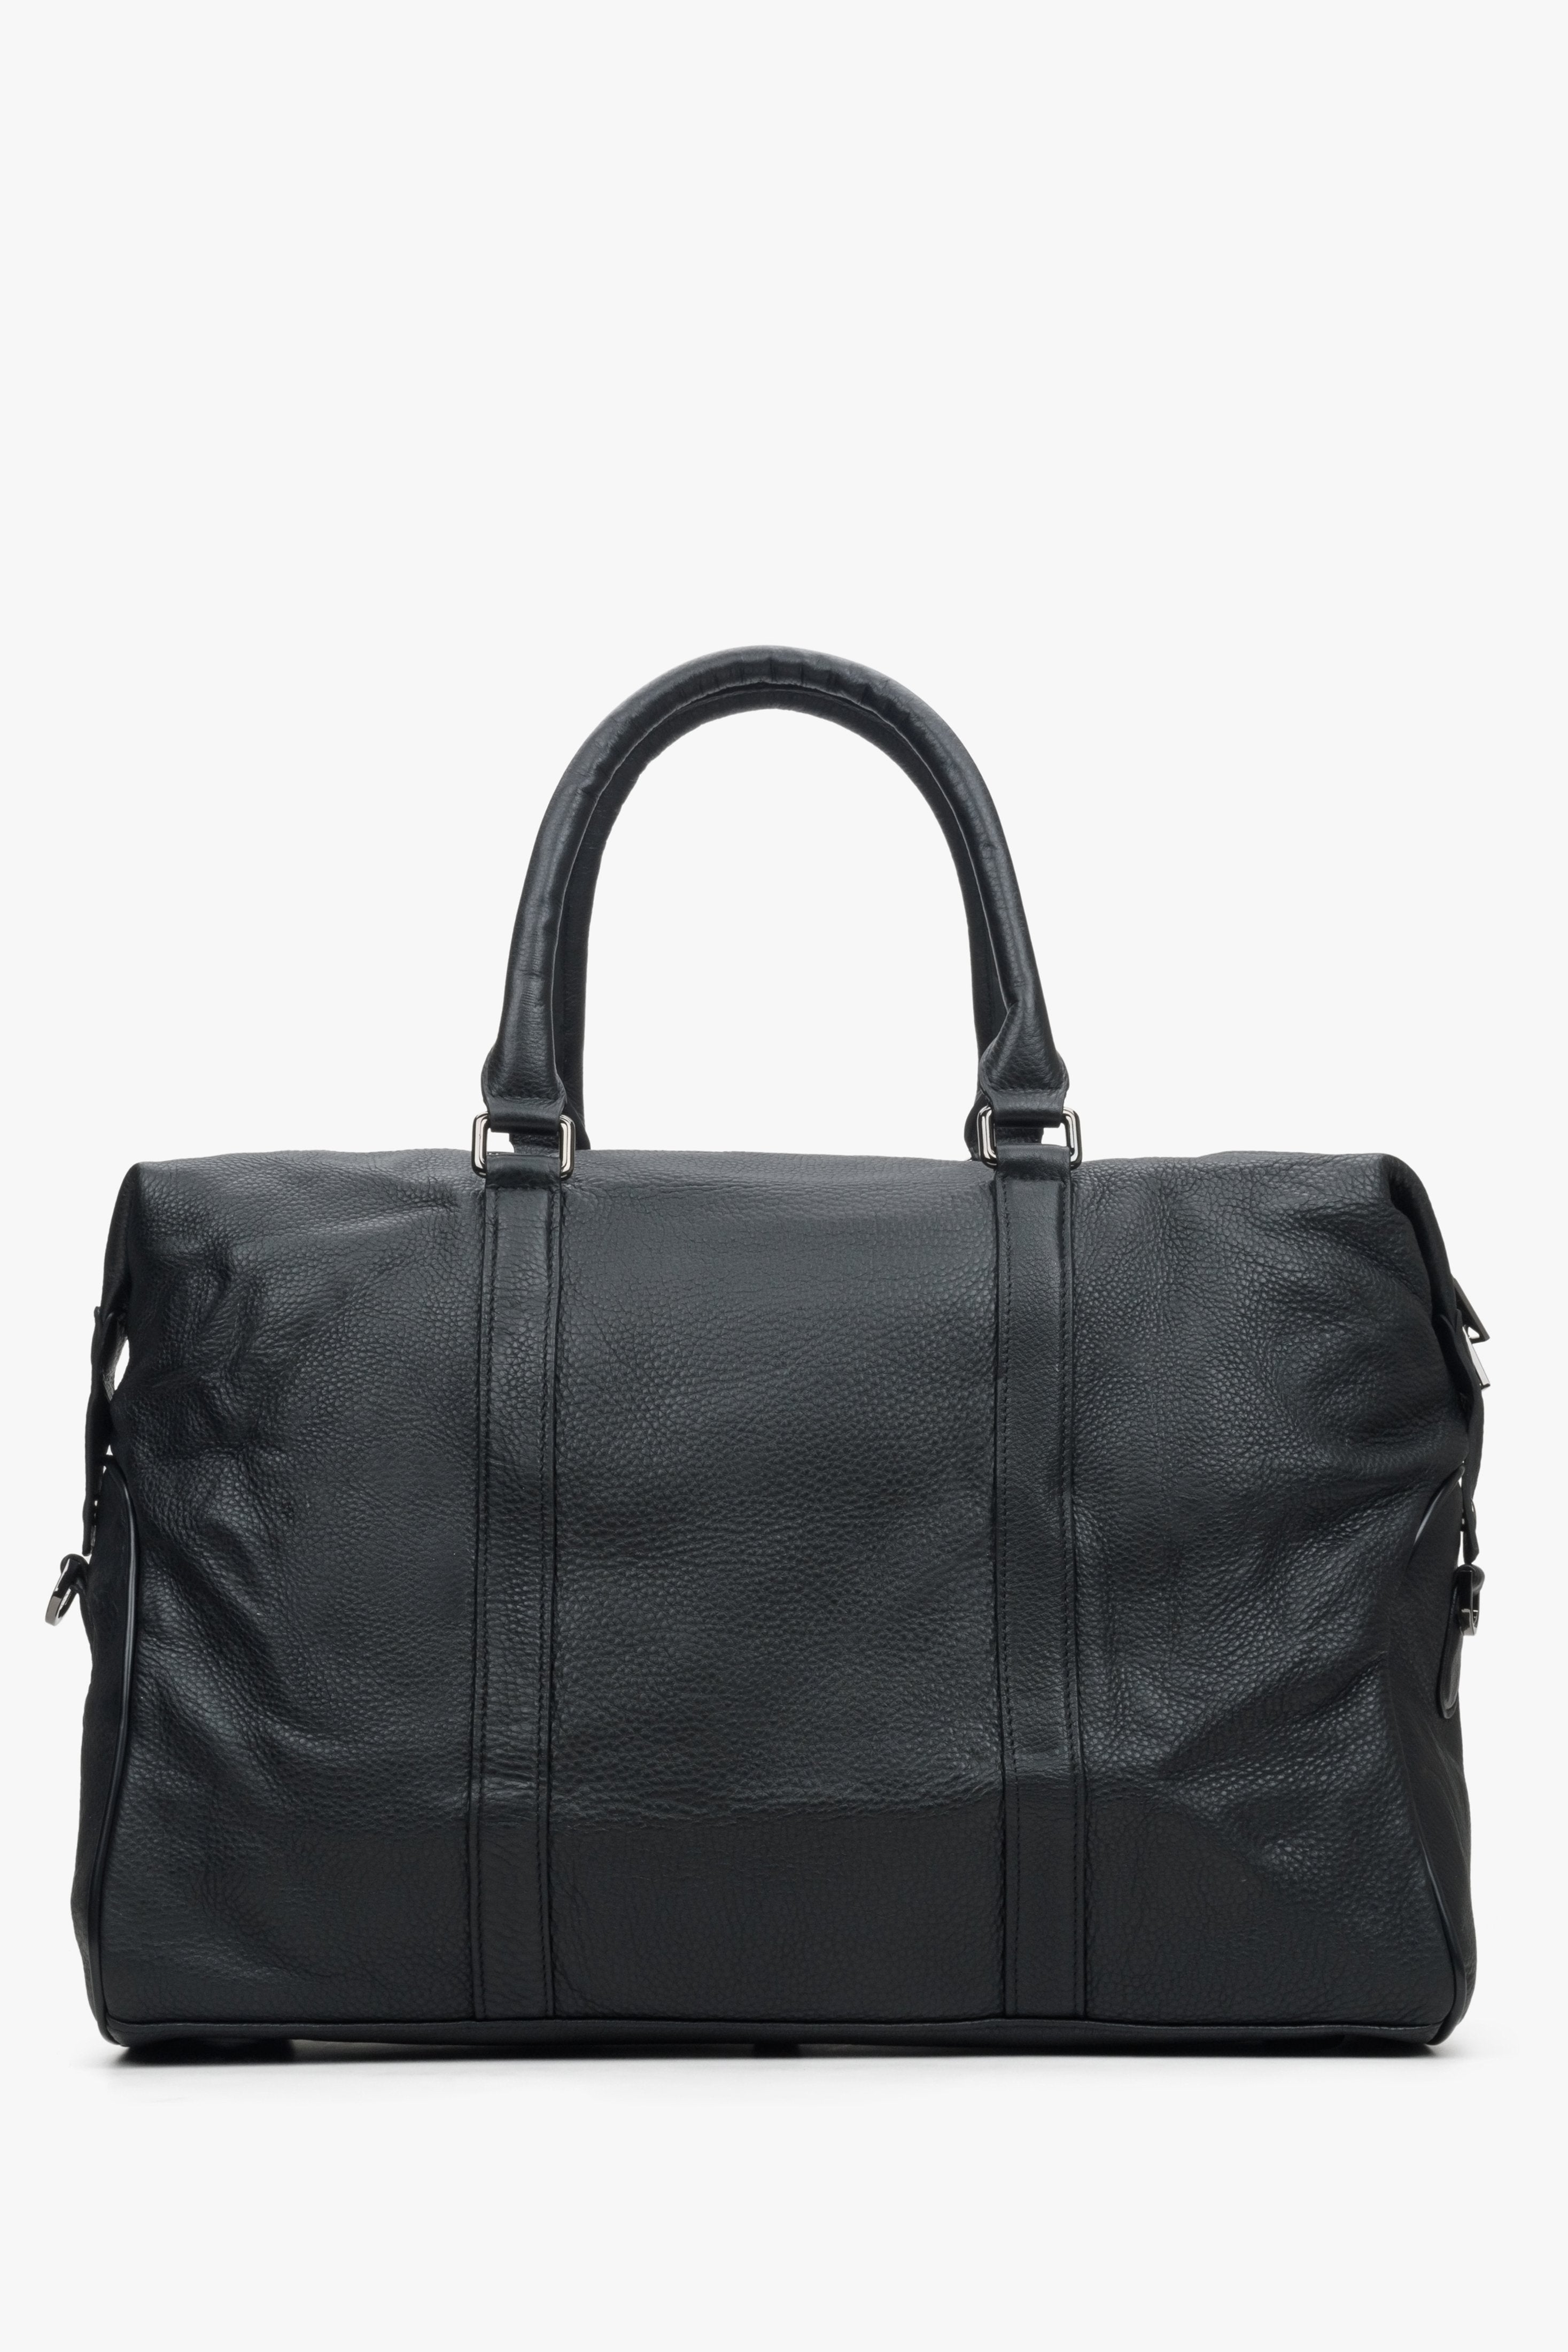 Men's black large travel bag by Estro.